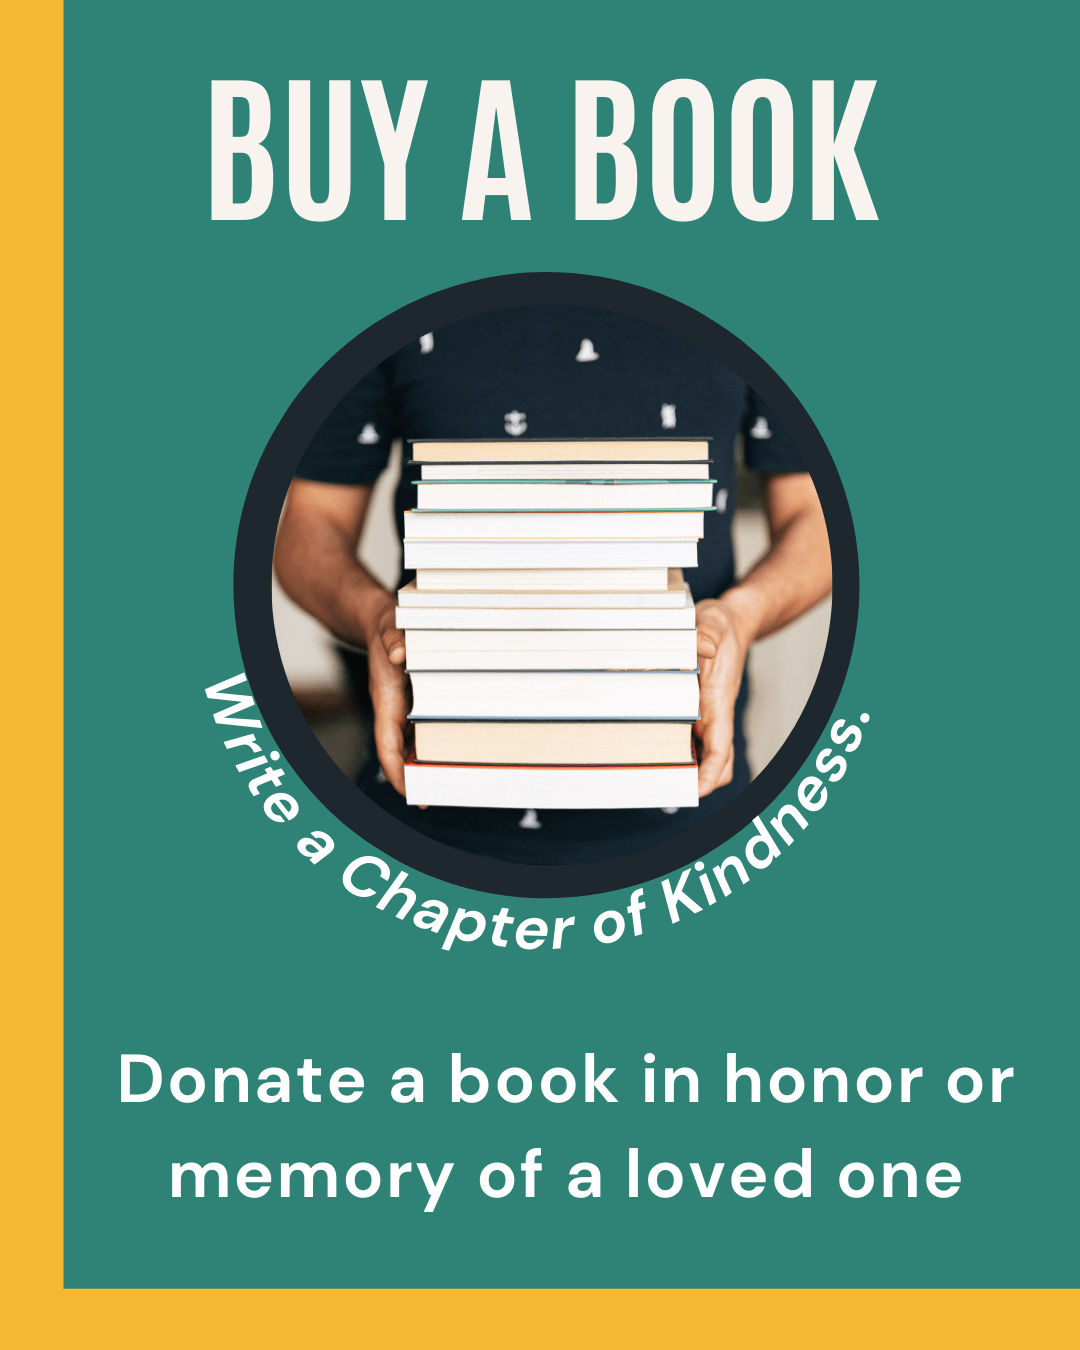 Buy A Book fundraiser